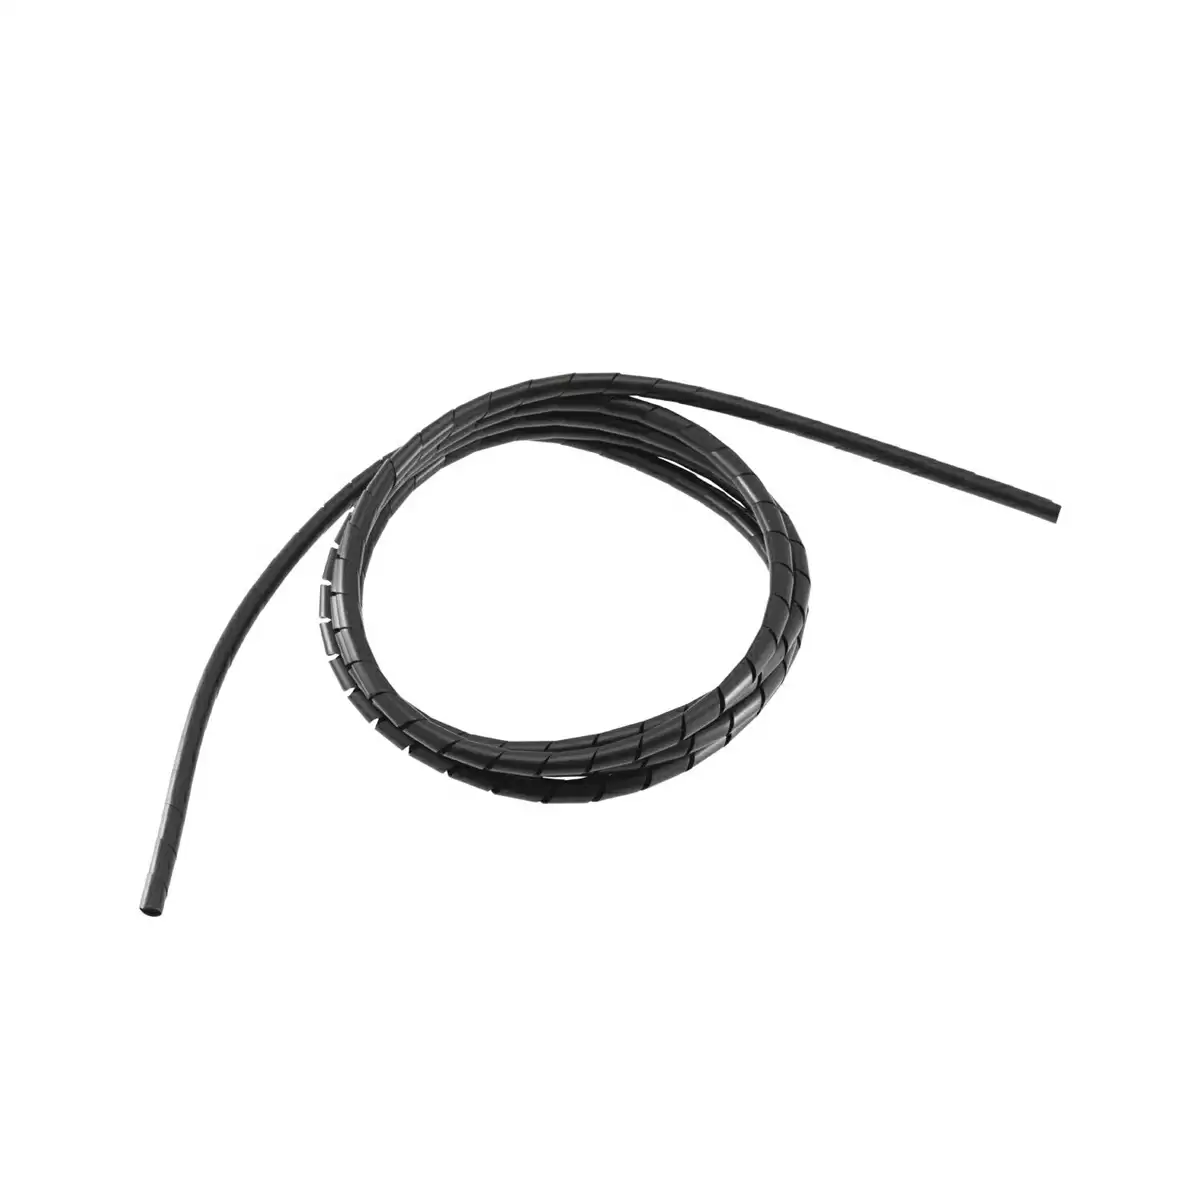 Funda Protectora Carrete Cable 6mm x 200cm Negro - image